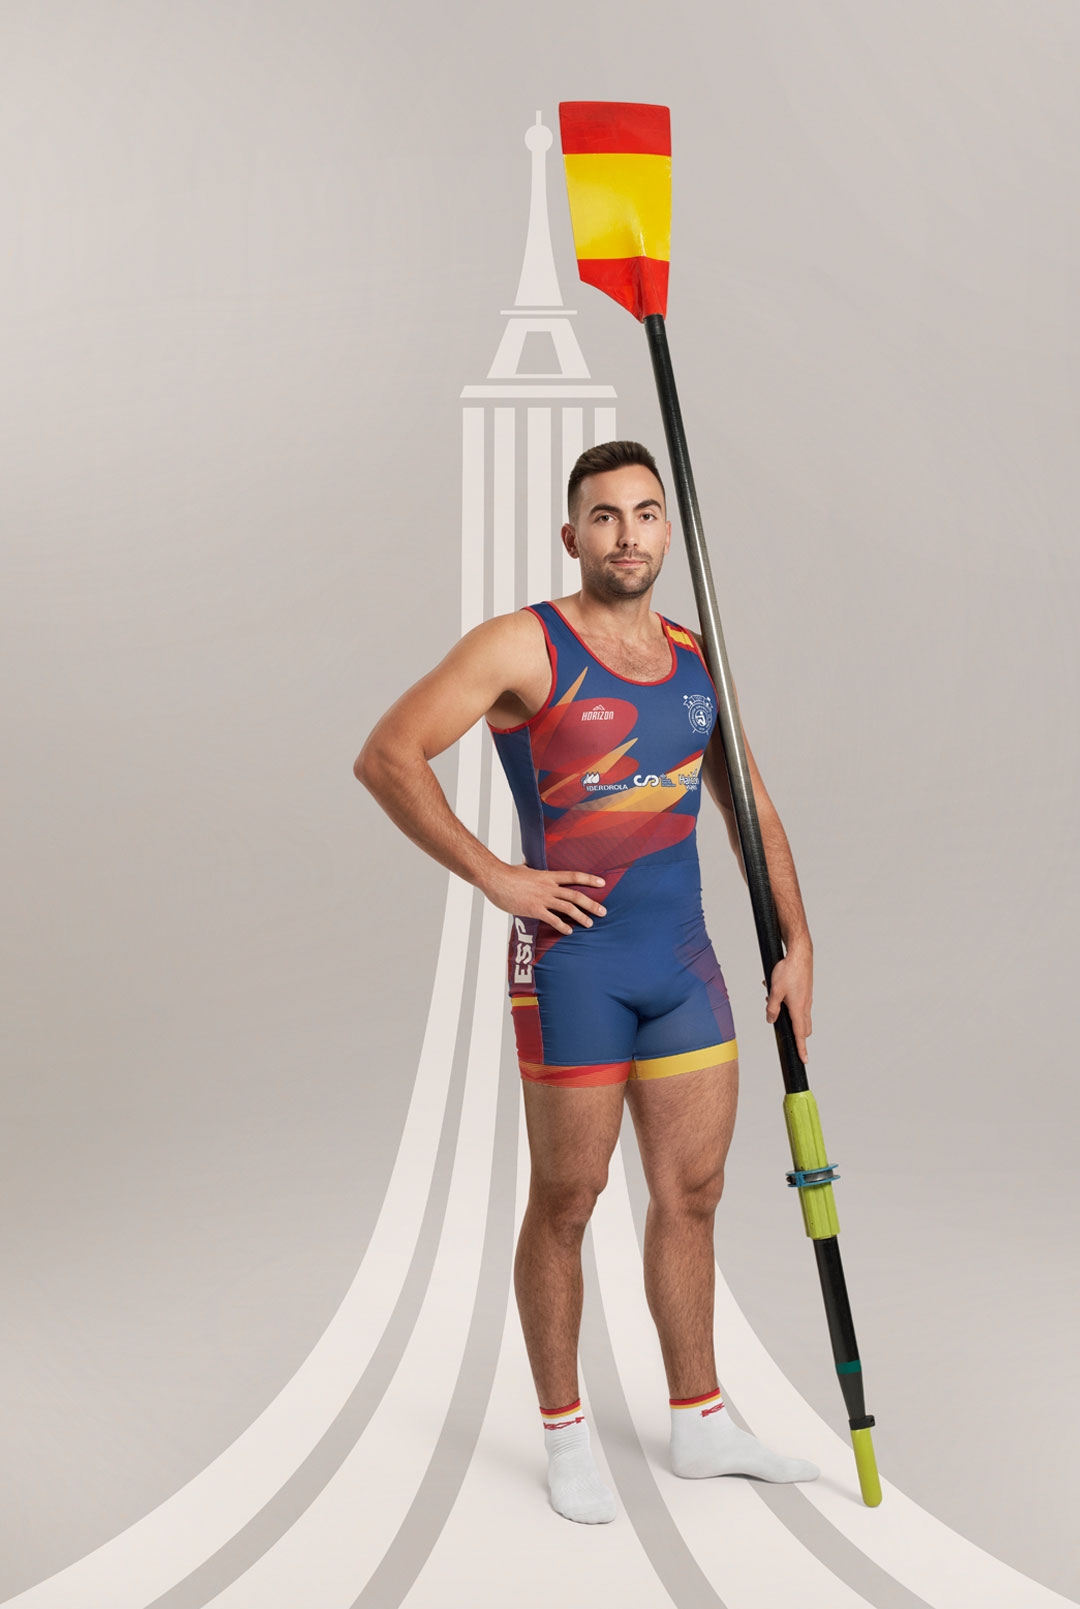 Rodrigo Conde hopes to win a medal at the Paris Games alongside his rowing partner Aleix García